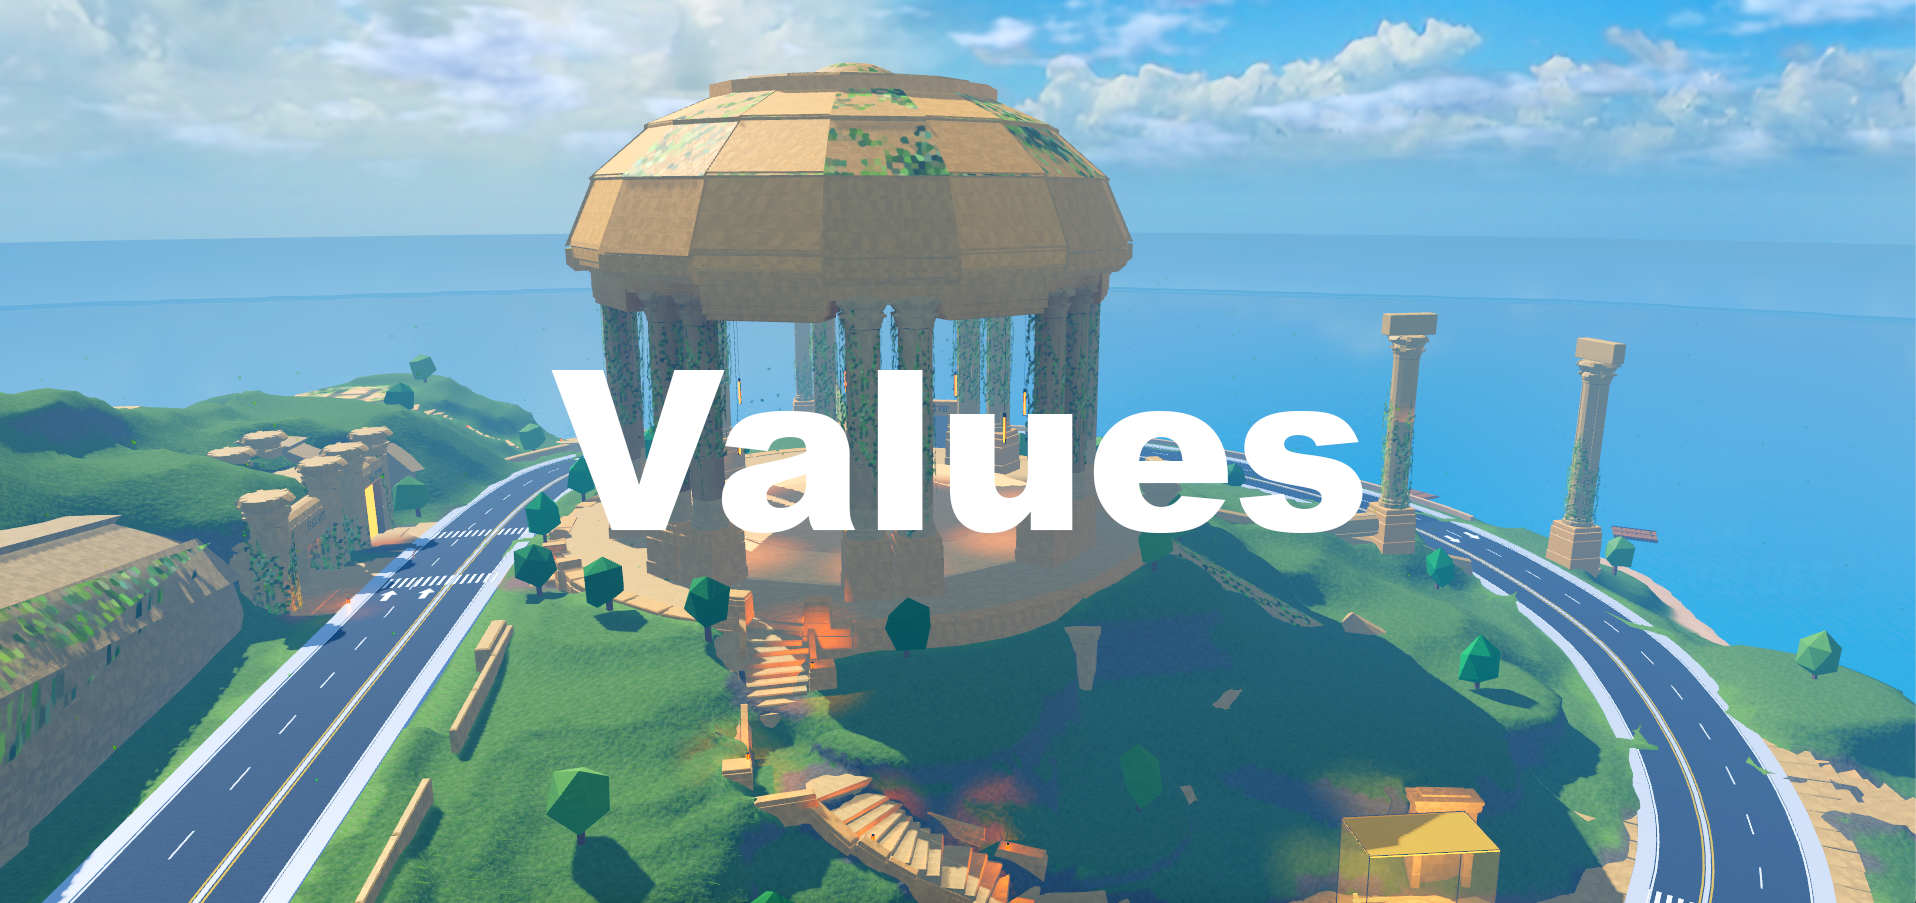 JB Values - Values  Roblox Jailbreak Trading